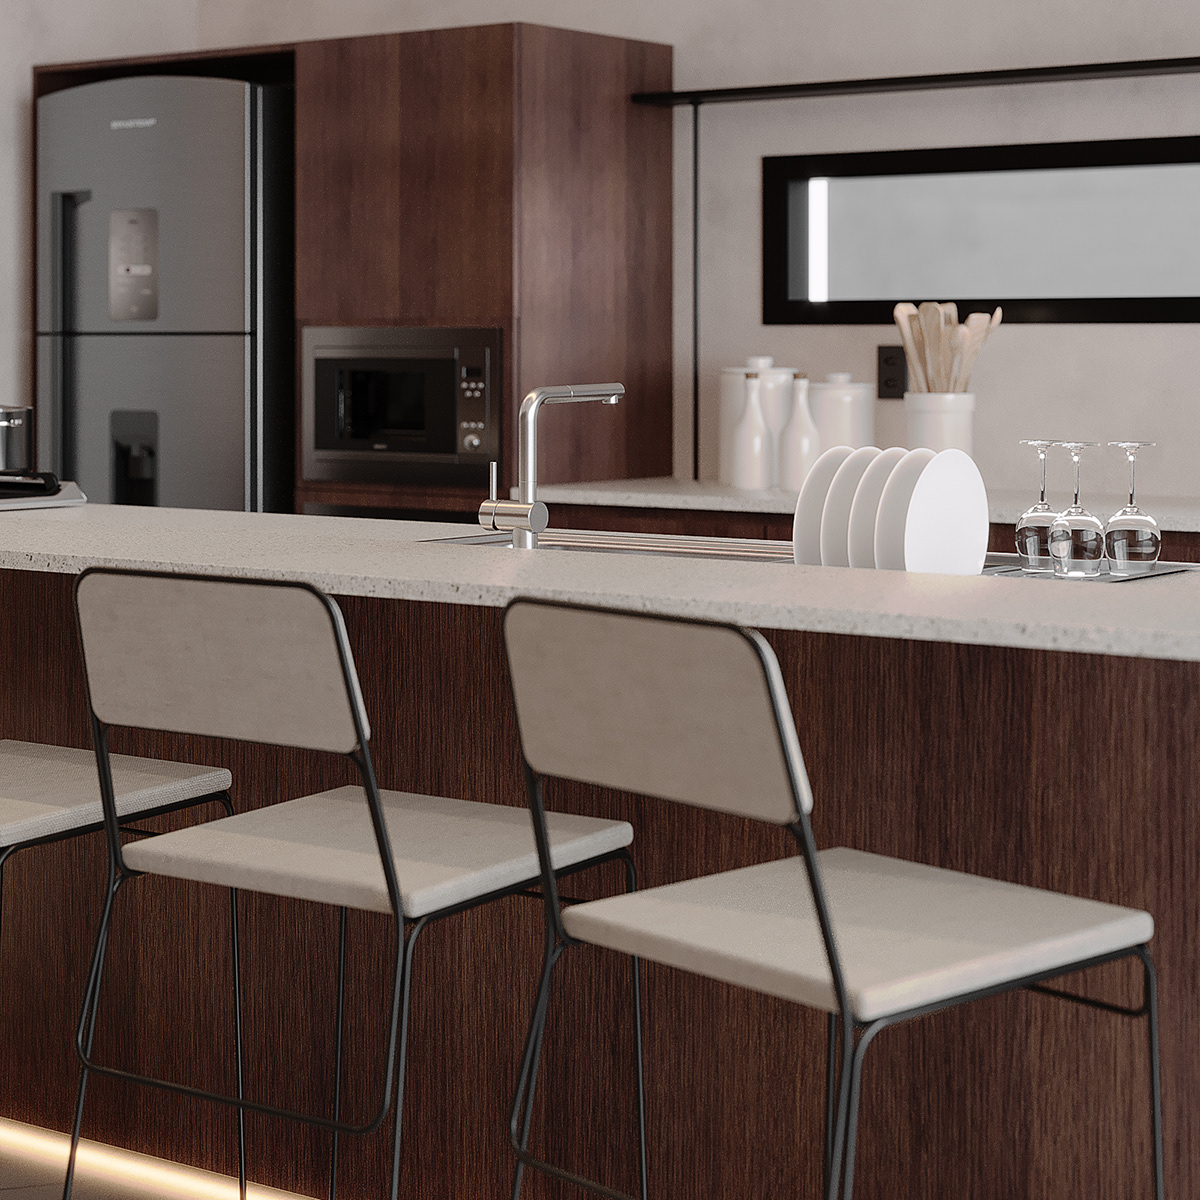 kitchendesign living room interiordesign interiorarchitecture architecture Render corona 3ds max archviz